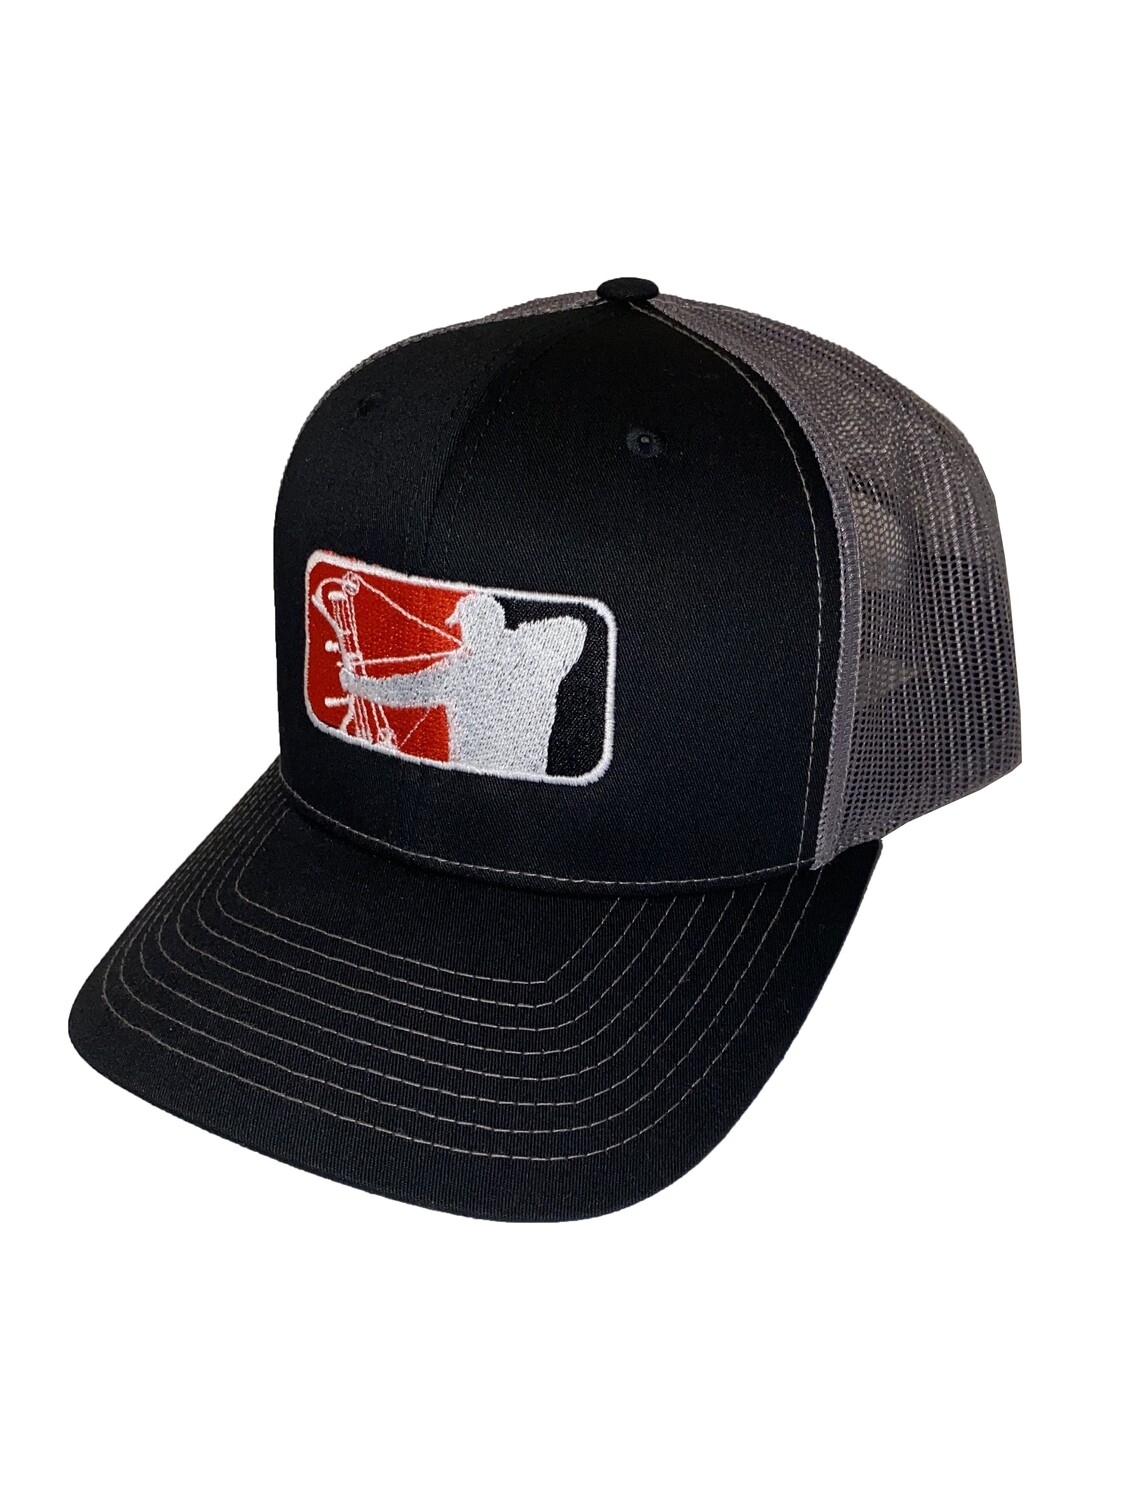 Black Richardson Hat w/ Red Logo